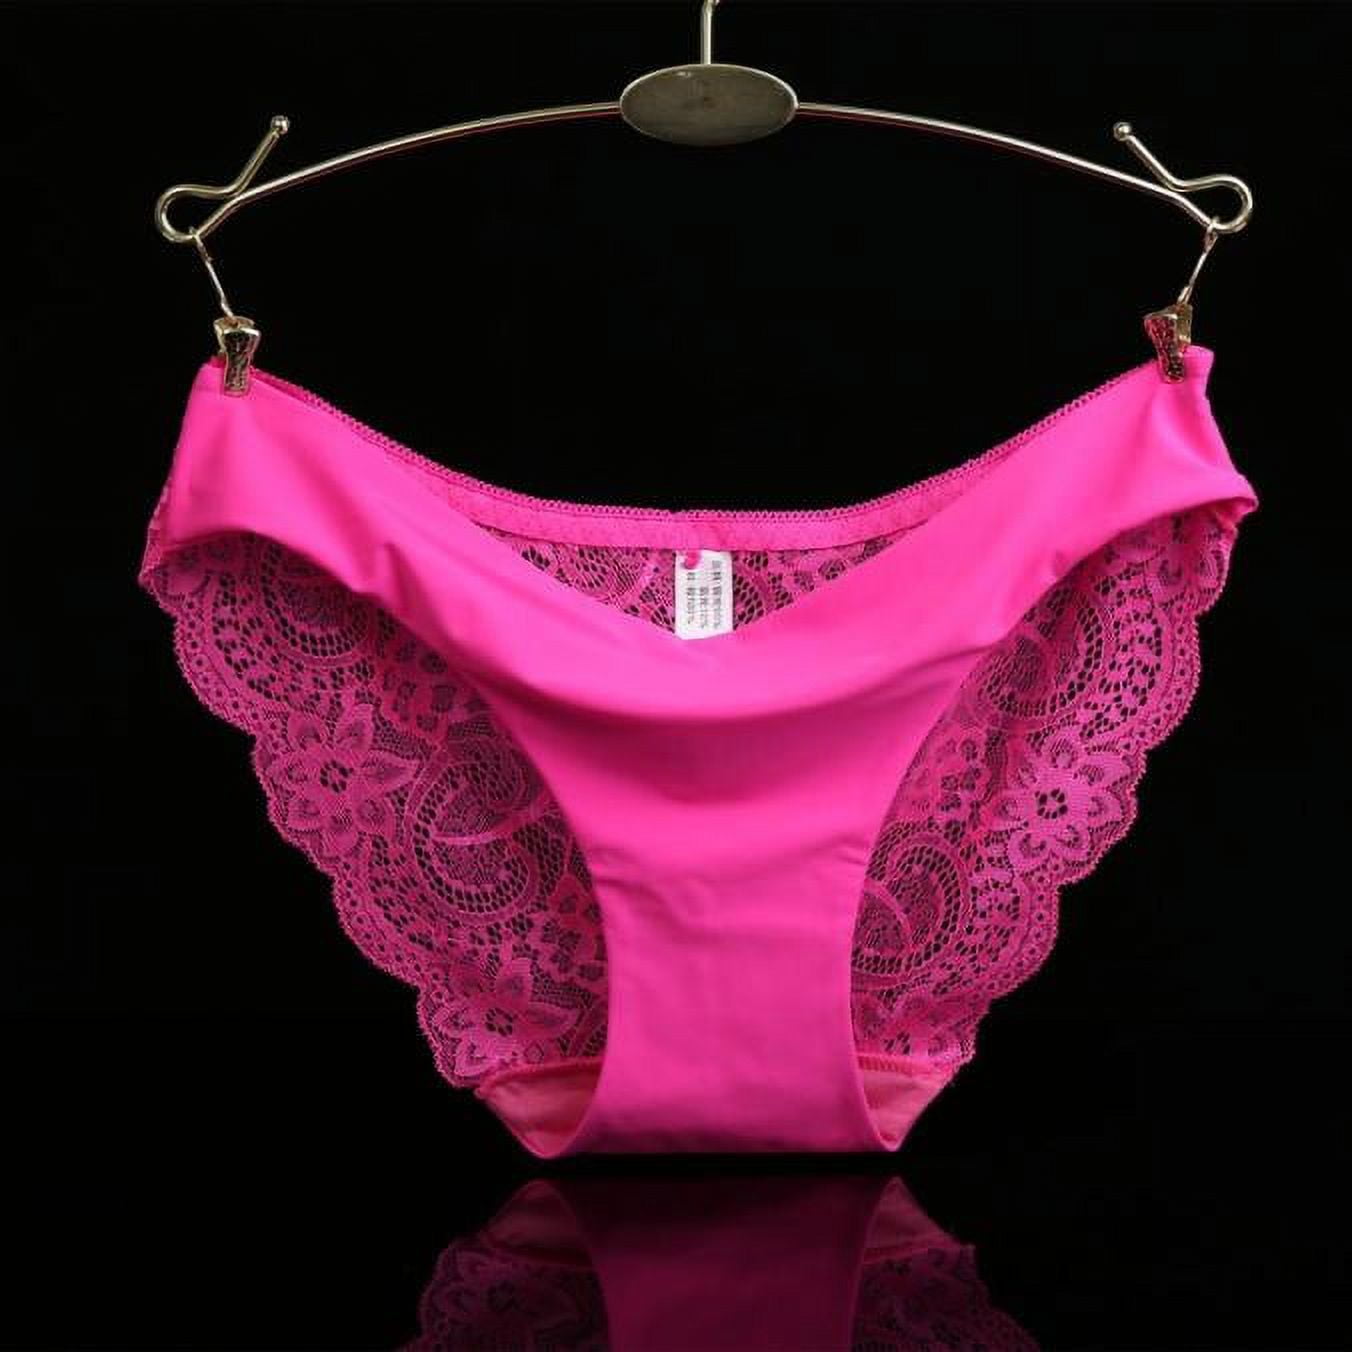 Ruidigrace Fashion Women Underwear Brief lace Panties Seamless Cotton Panty  Hollow Purple S